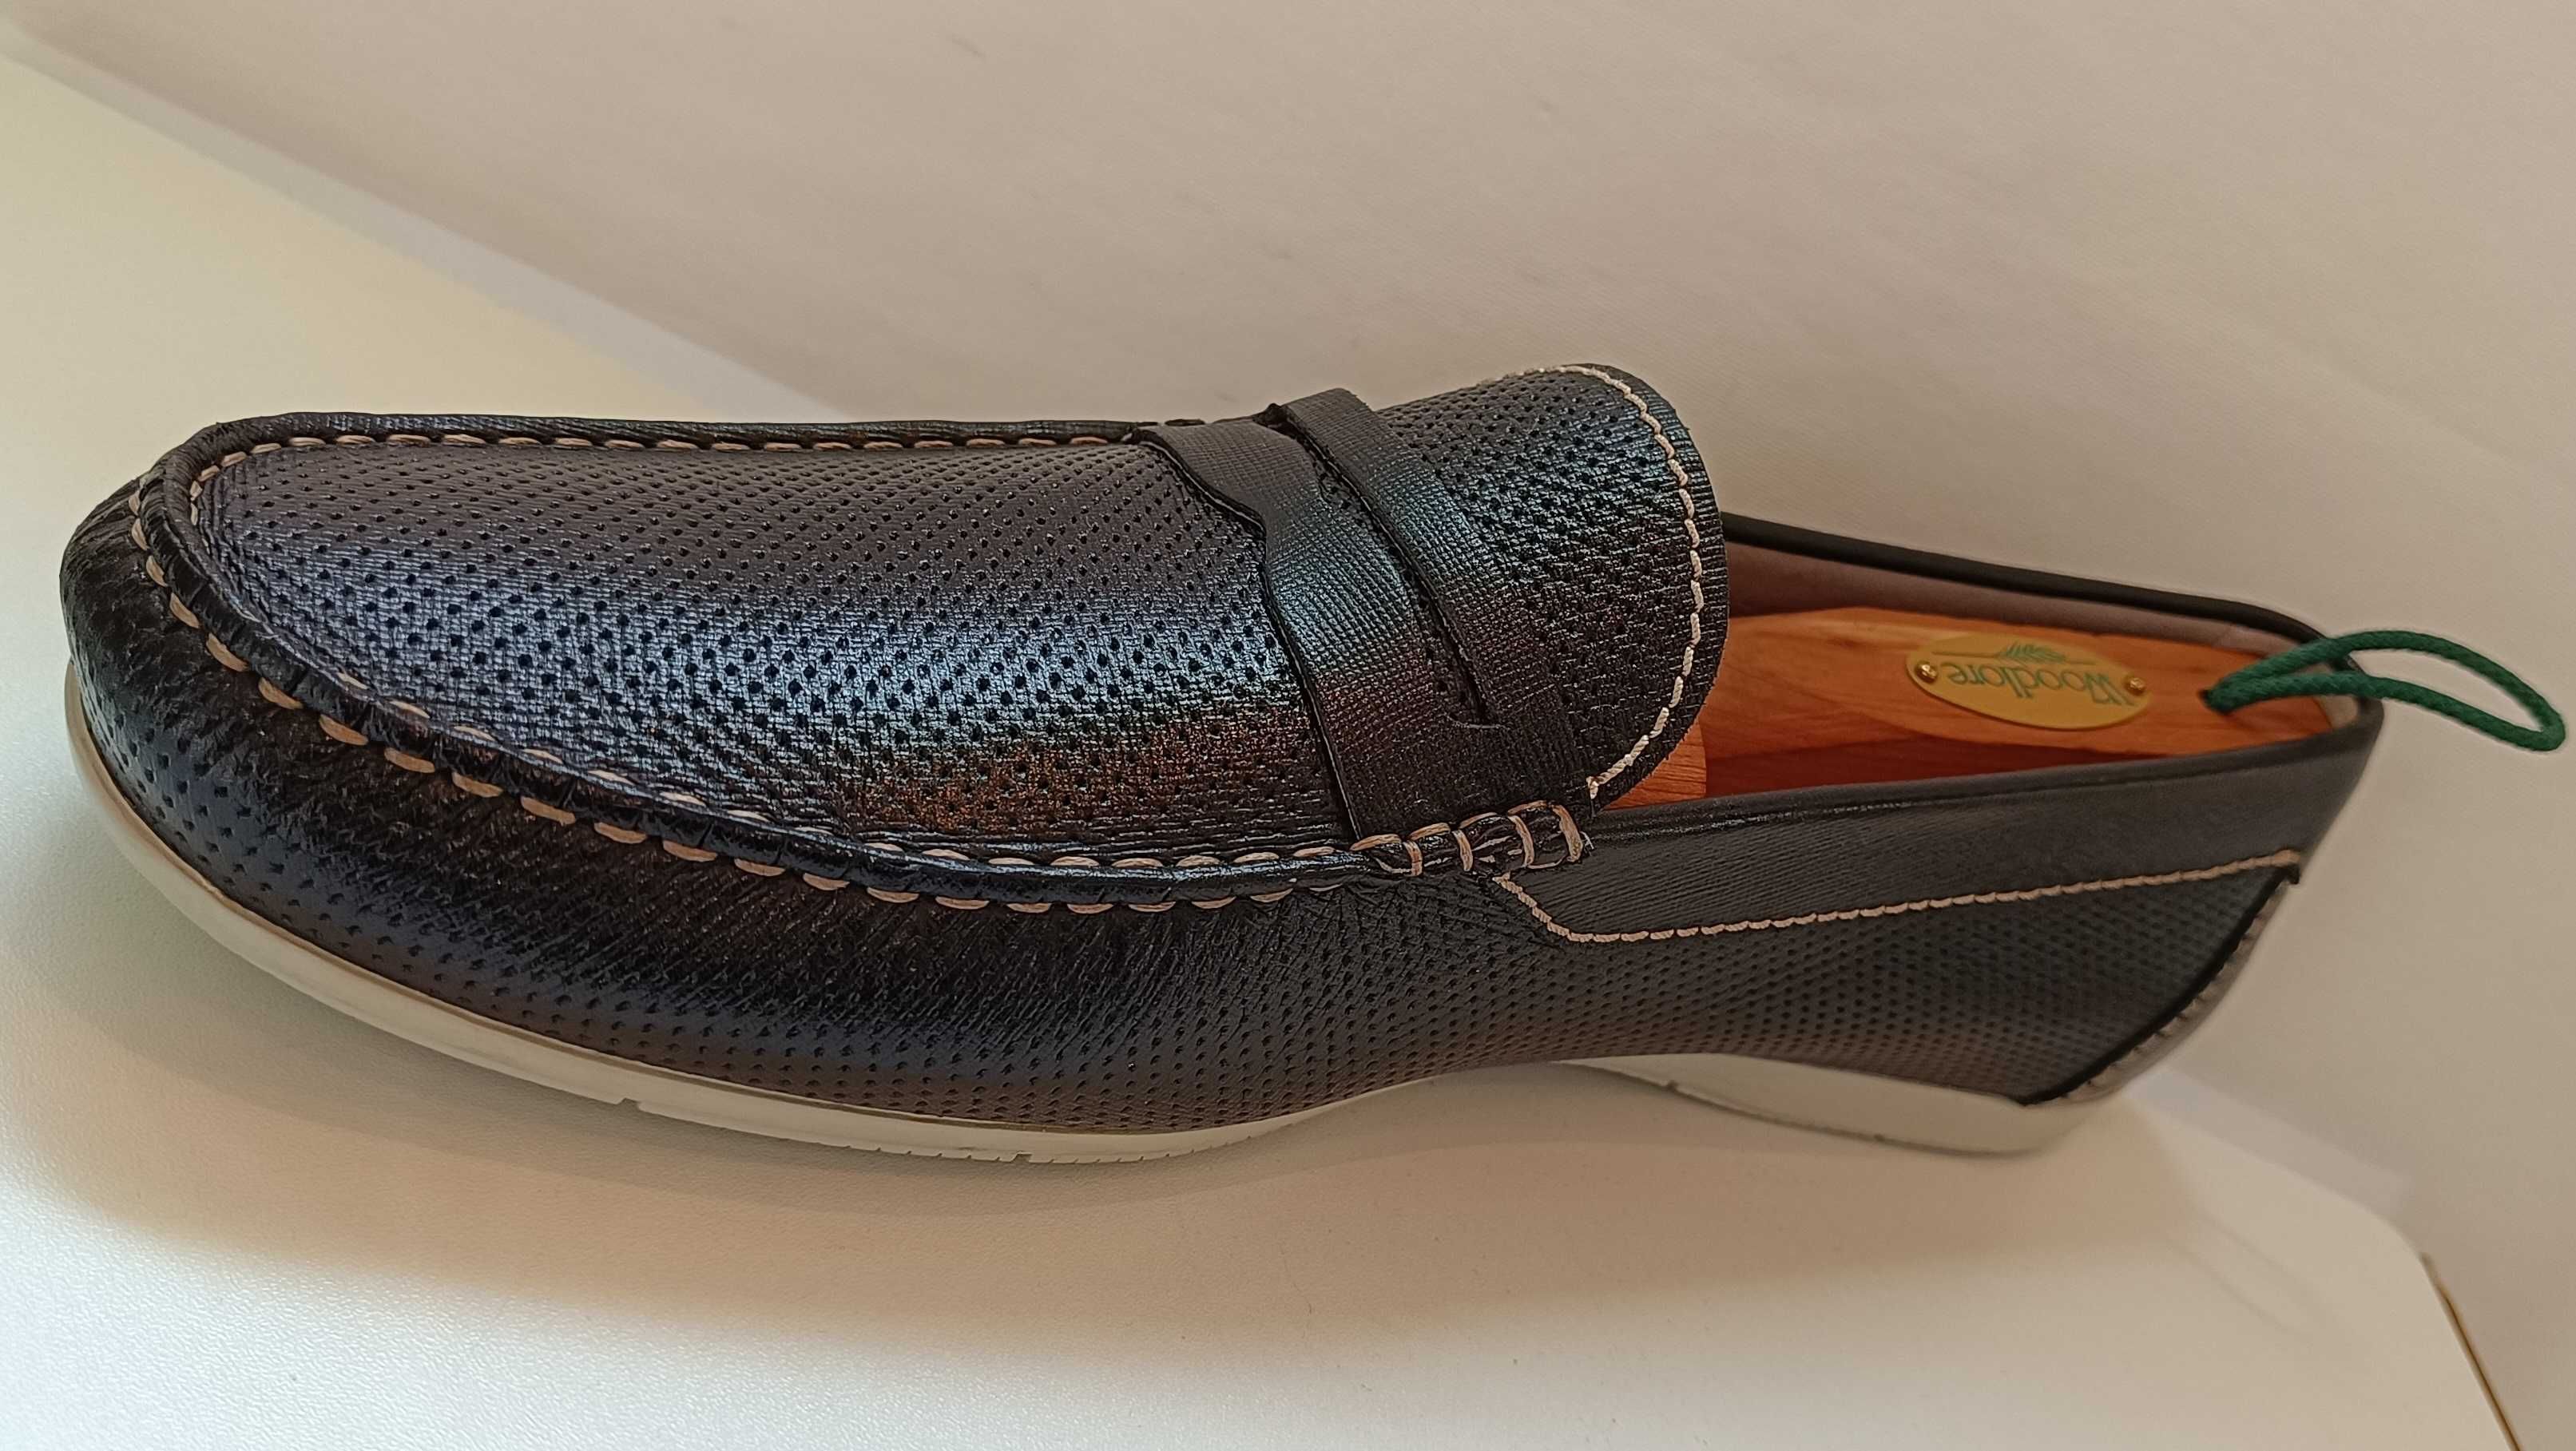 Pantofi loafer 44 slip on Stonefly NOI super confort piele naturala